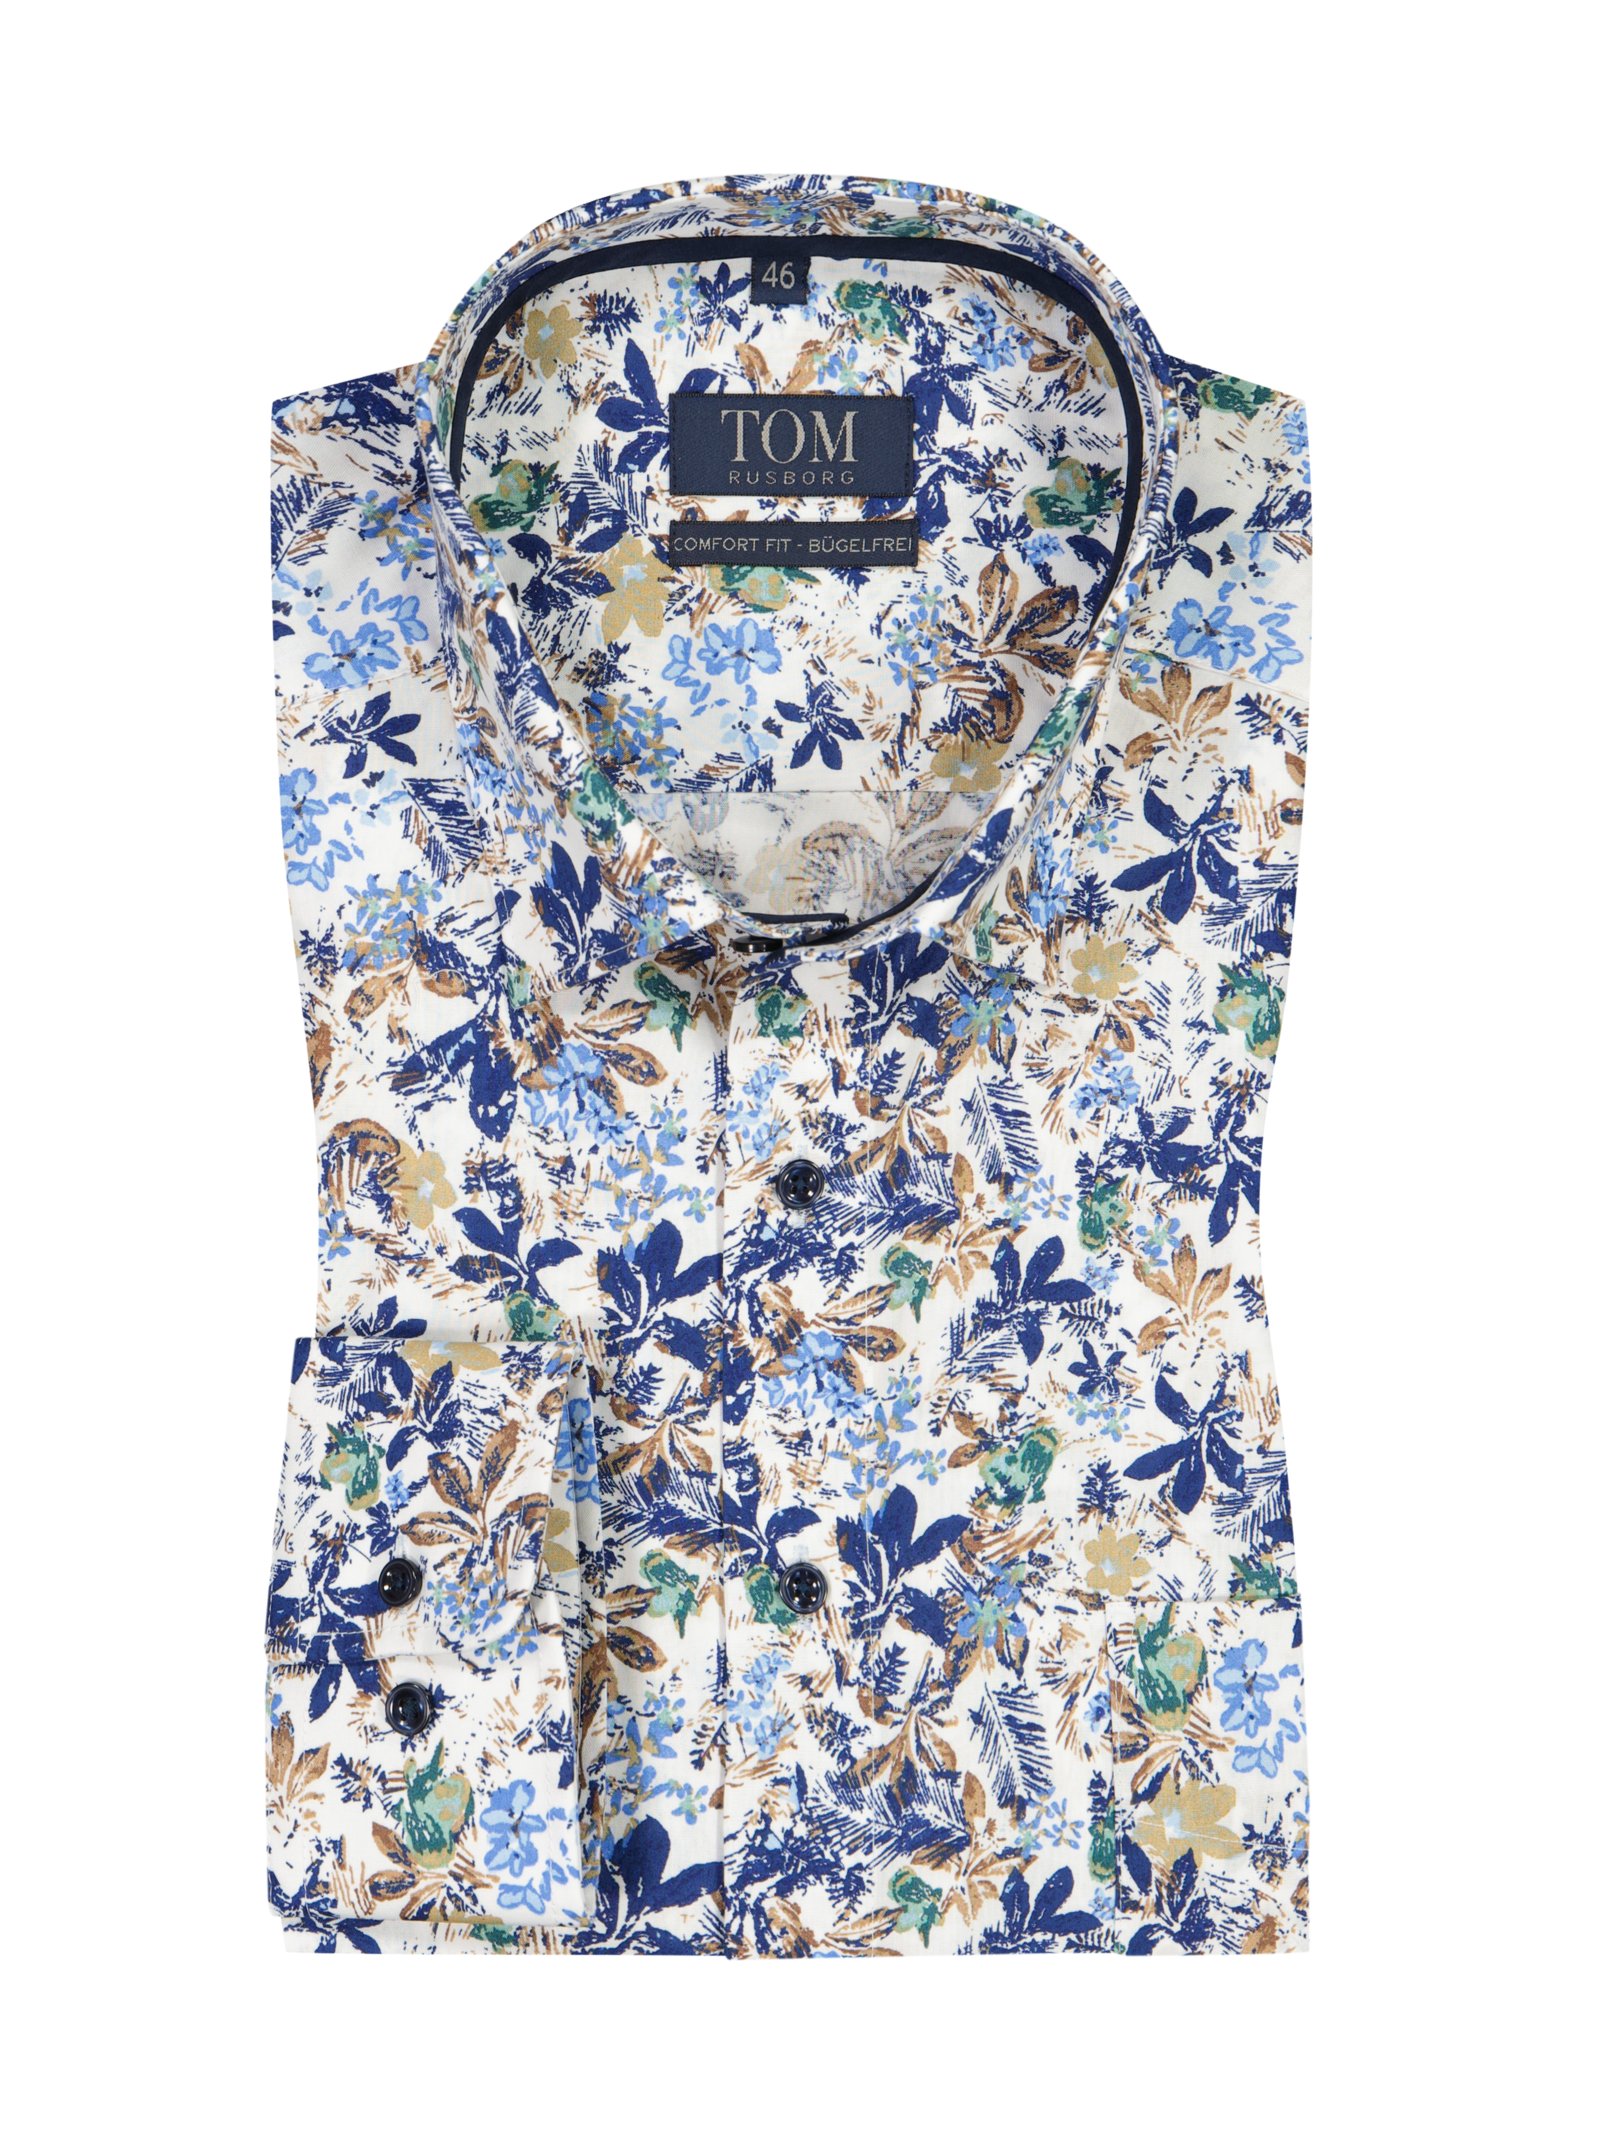 Übergröße : Tom Rusborg, Hemd mit floralem Muster, Comfort Fit in Blau